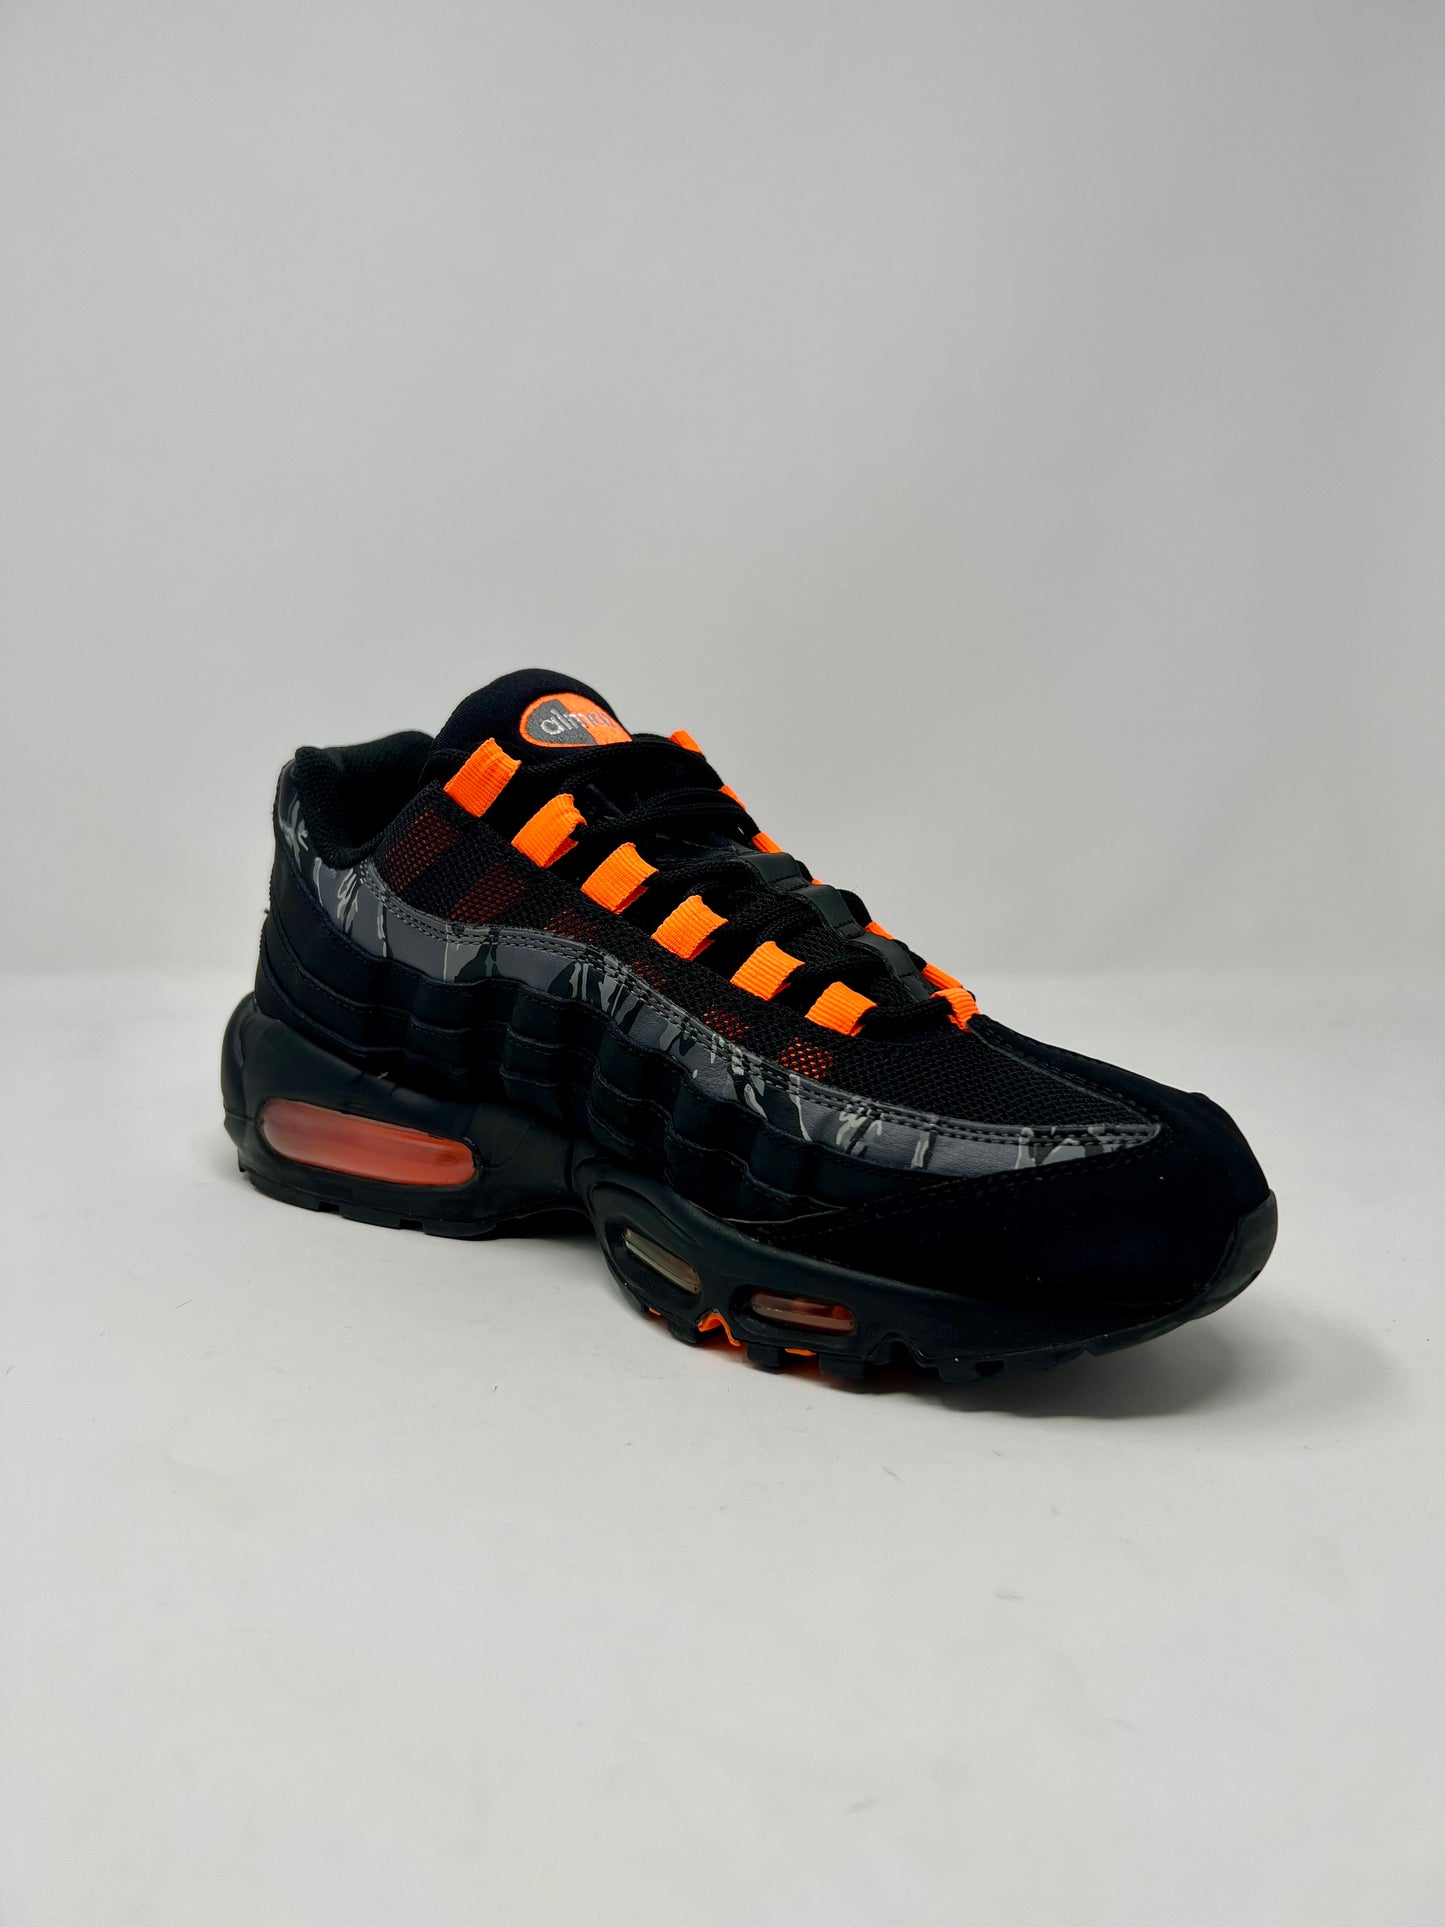 Nike Air Max 95 SI Black Orange Camo UK8